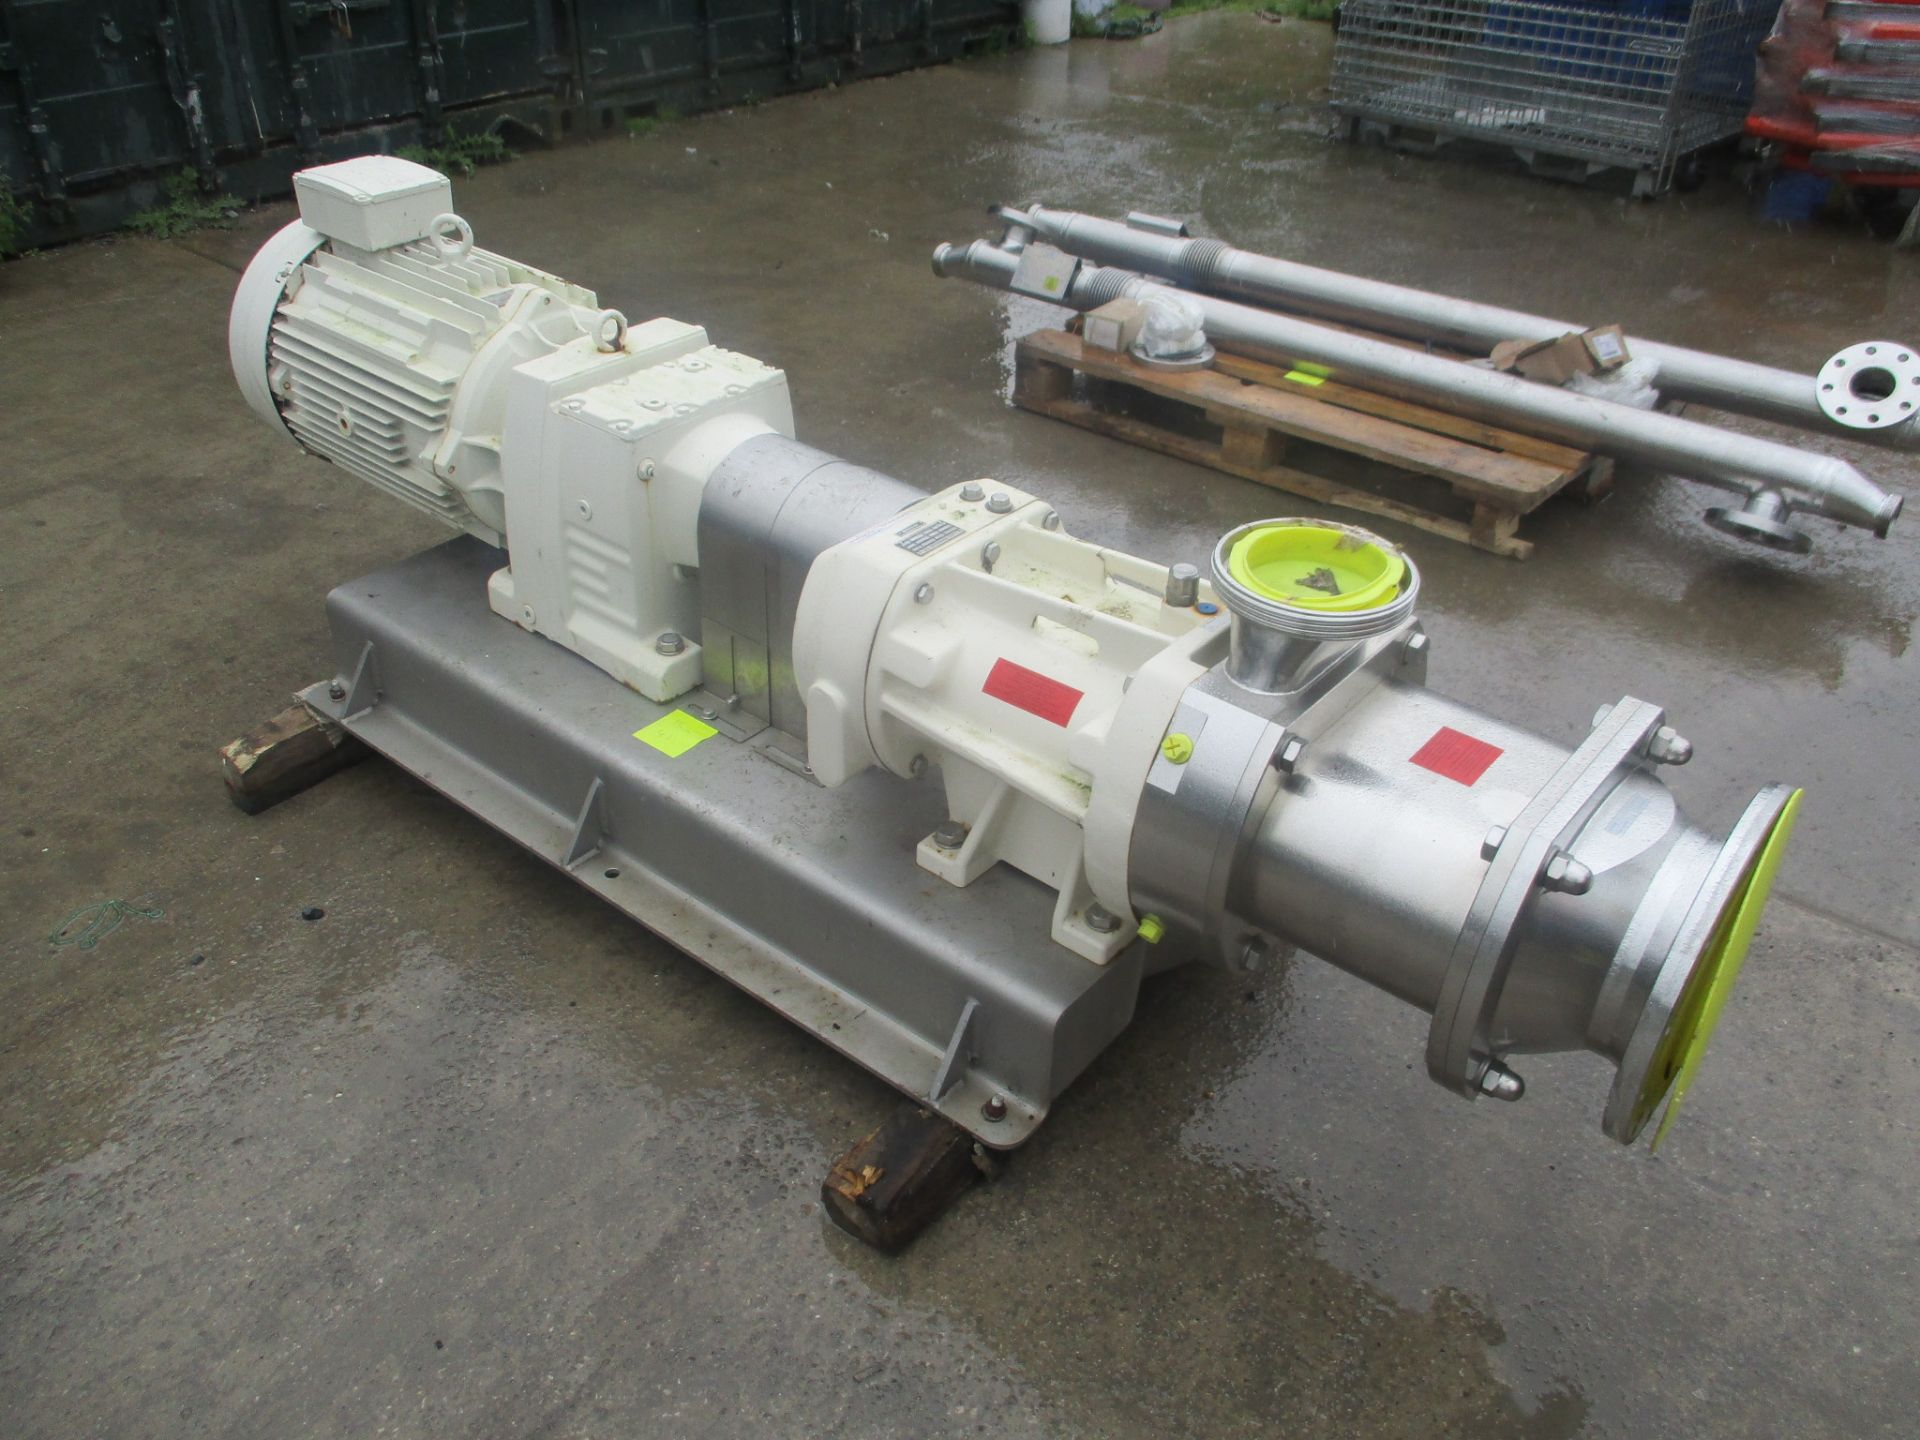 Bornemann SLHS 180-120 Pump, serial no. 112473, year of manufacture 2013, approx. 230cm x 70cm x